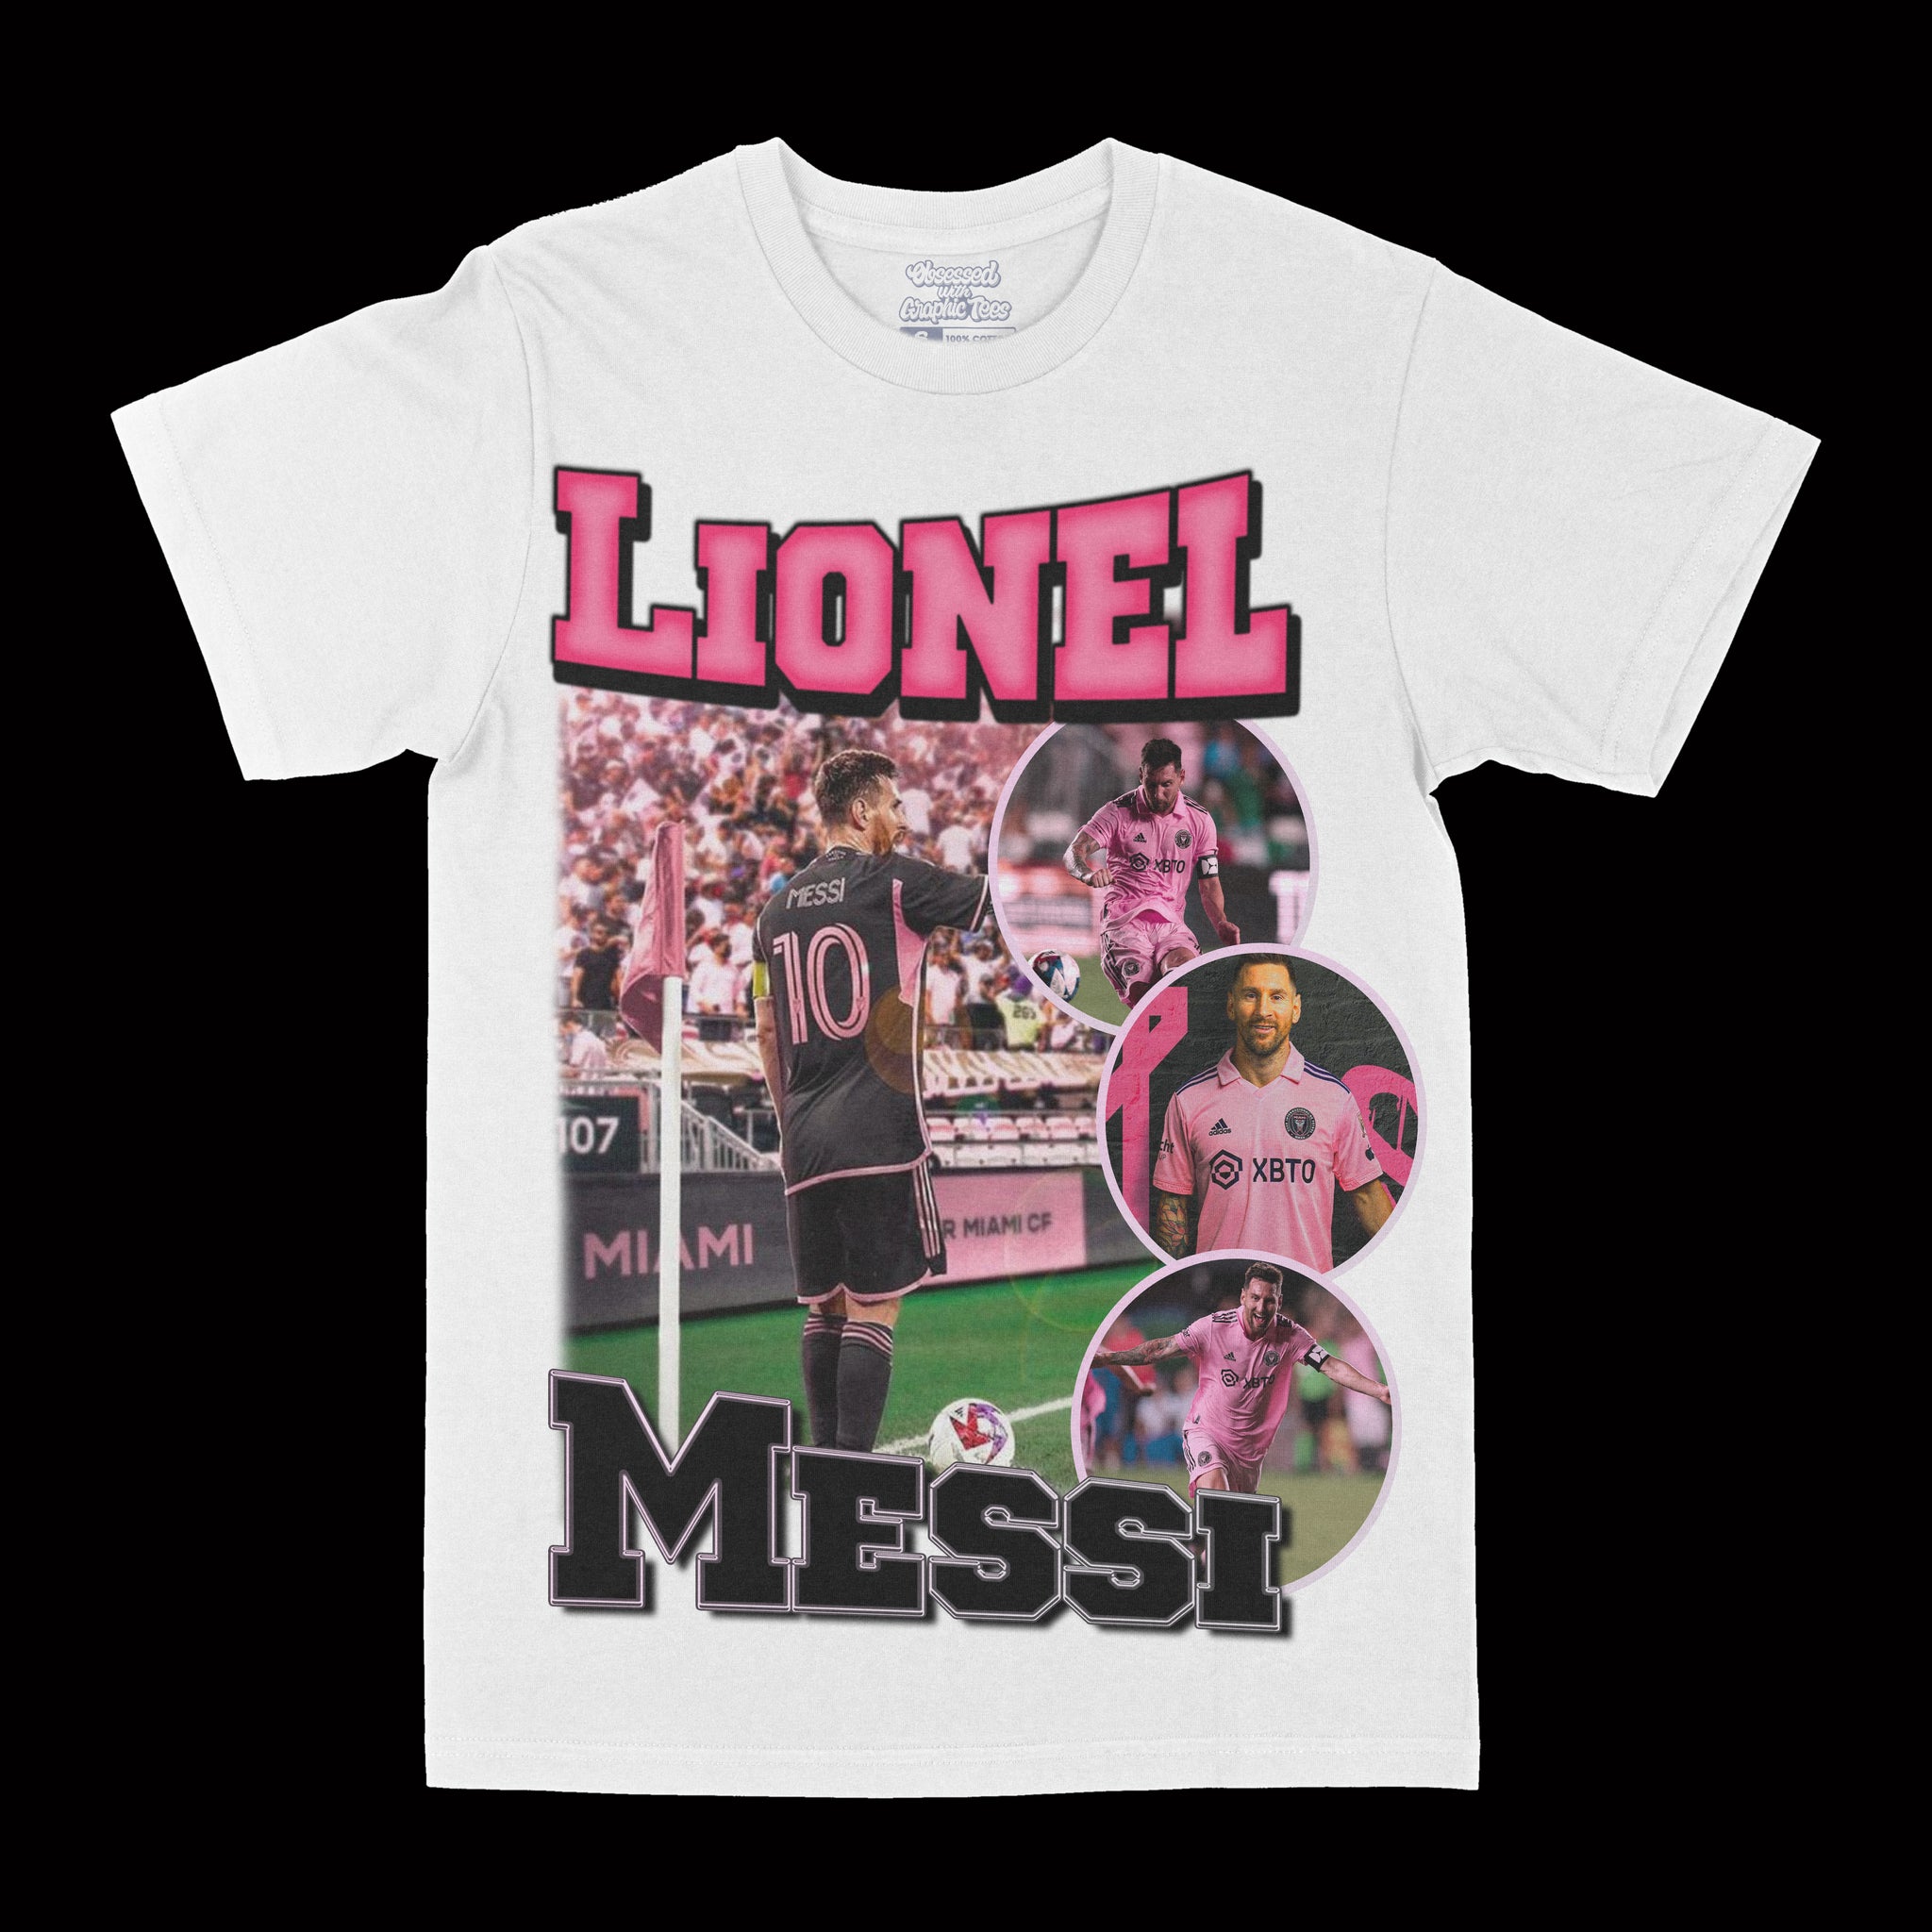 Lionel Messi "Miami" Graphic Tee